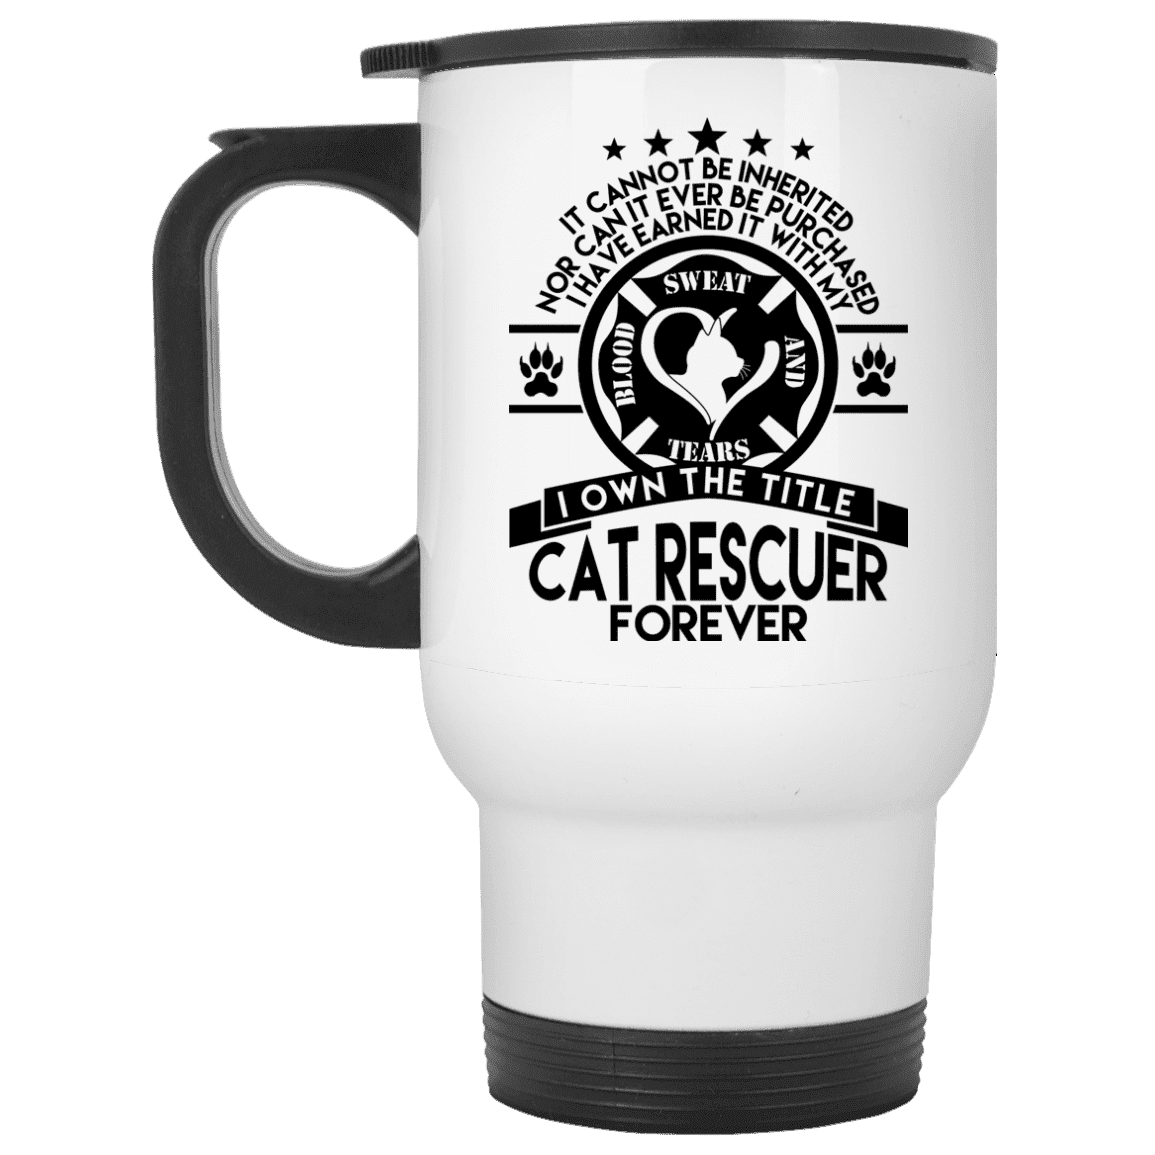 Cat Rescuer Forever - Mugs.